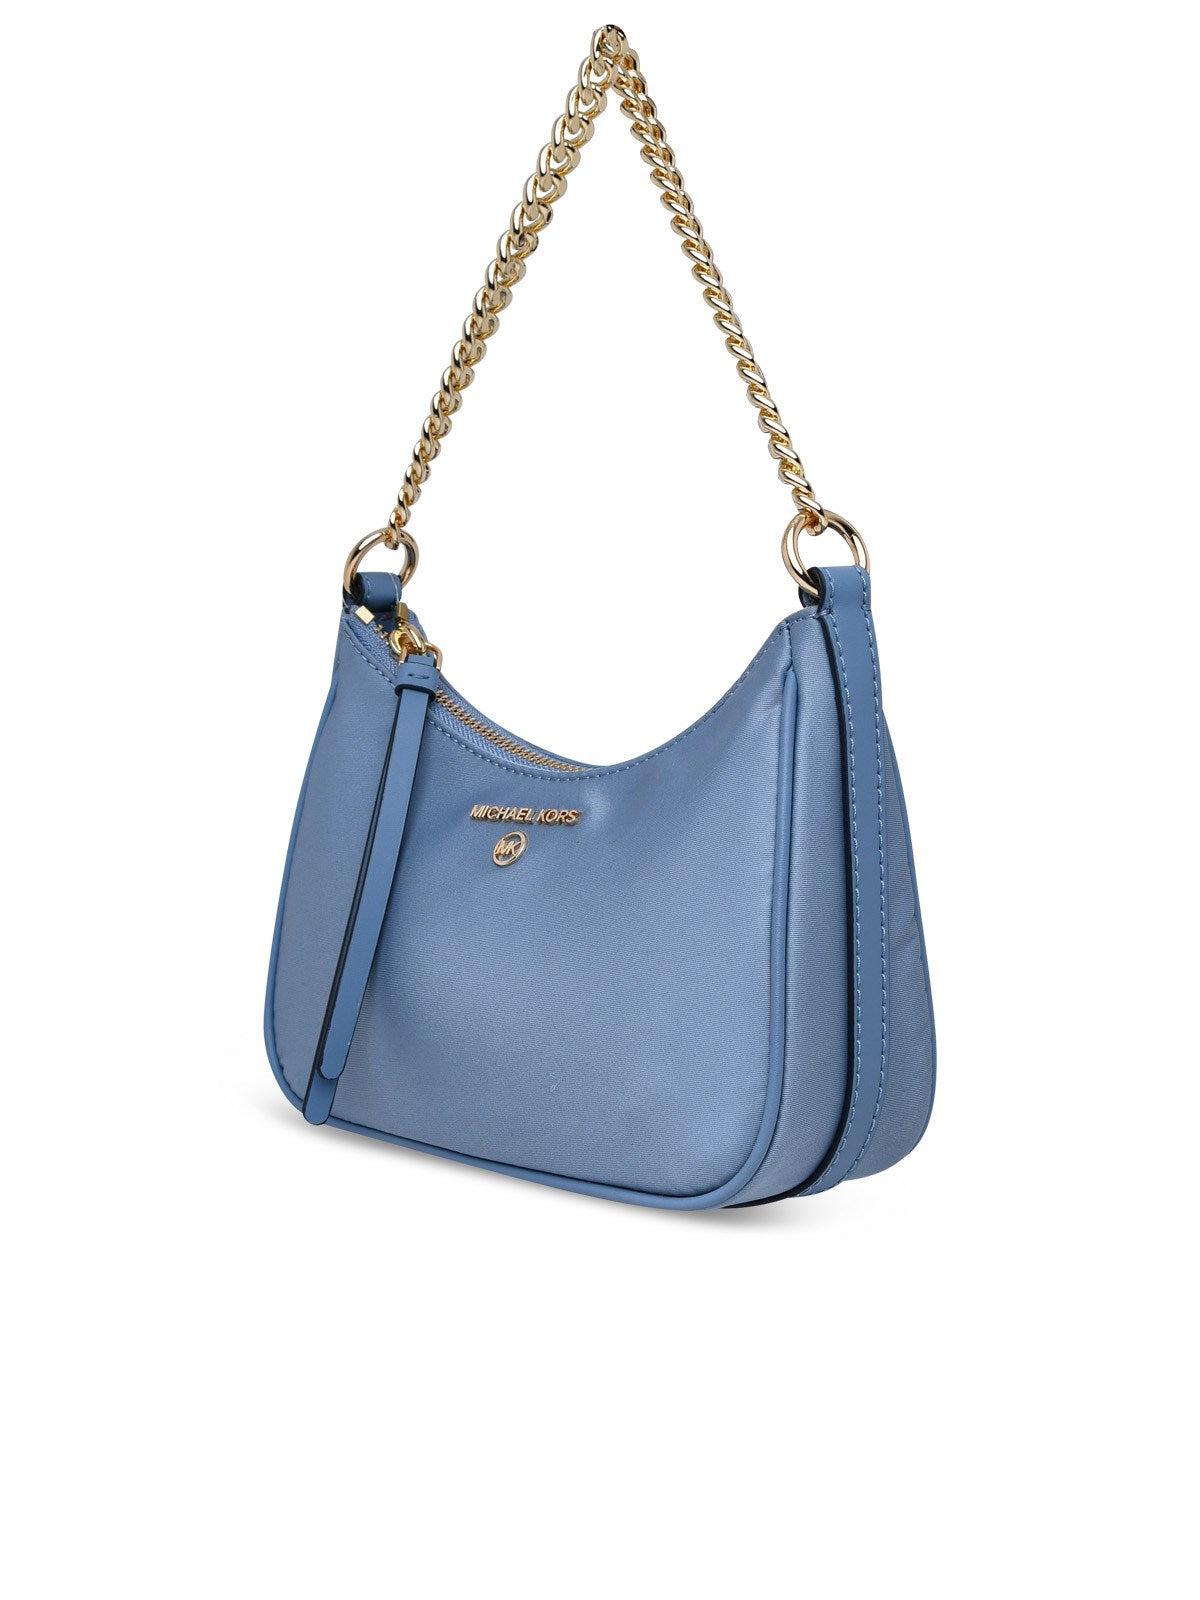 MICHAEL MICHAEL KORS | Slate blue Women‘s Handbag | YOOX